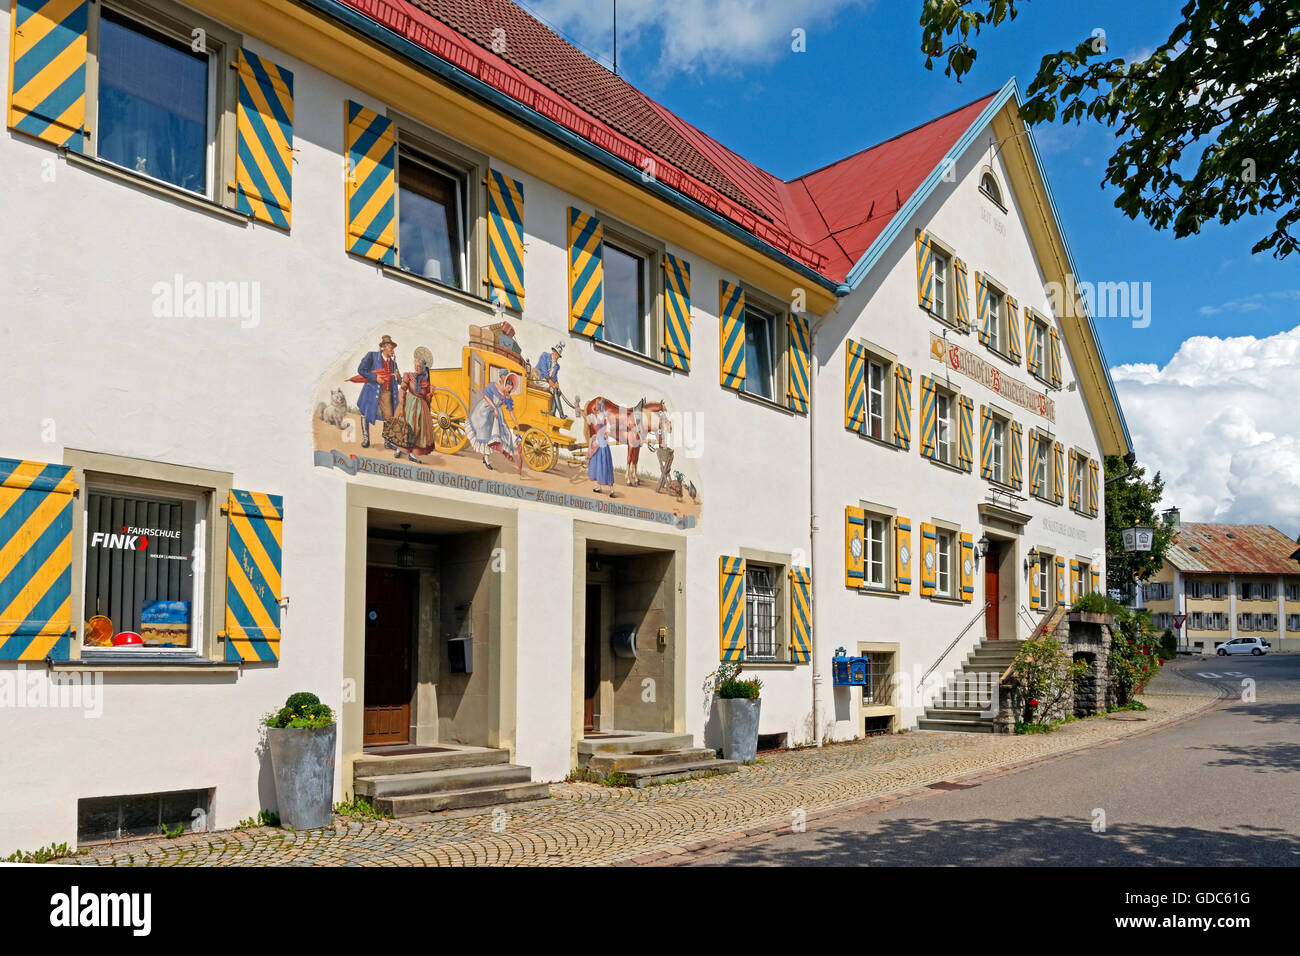 Hotel,inn Zur Post,window,shutters Stock Photo